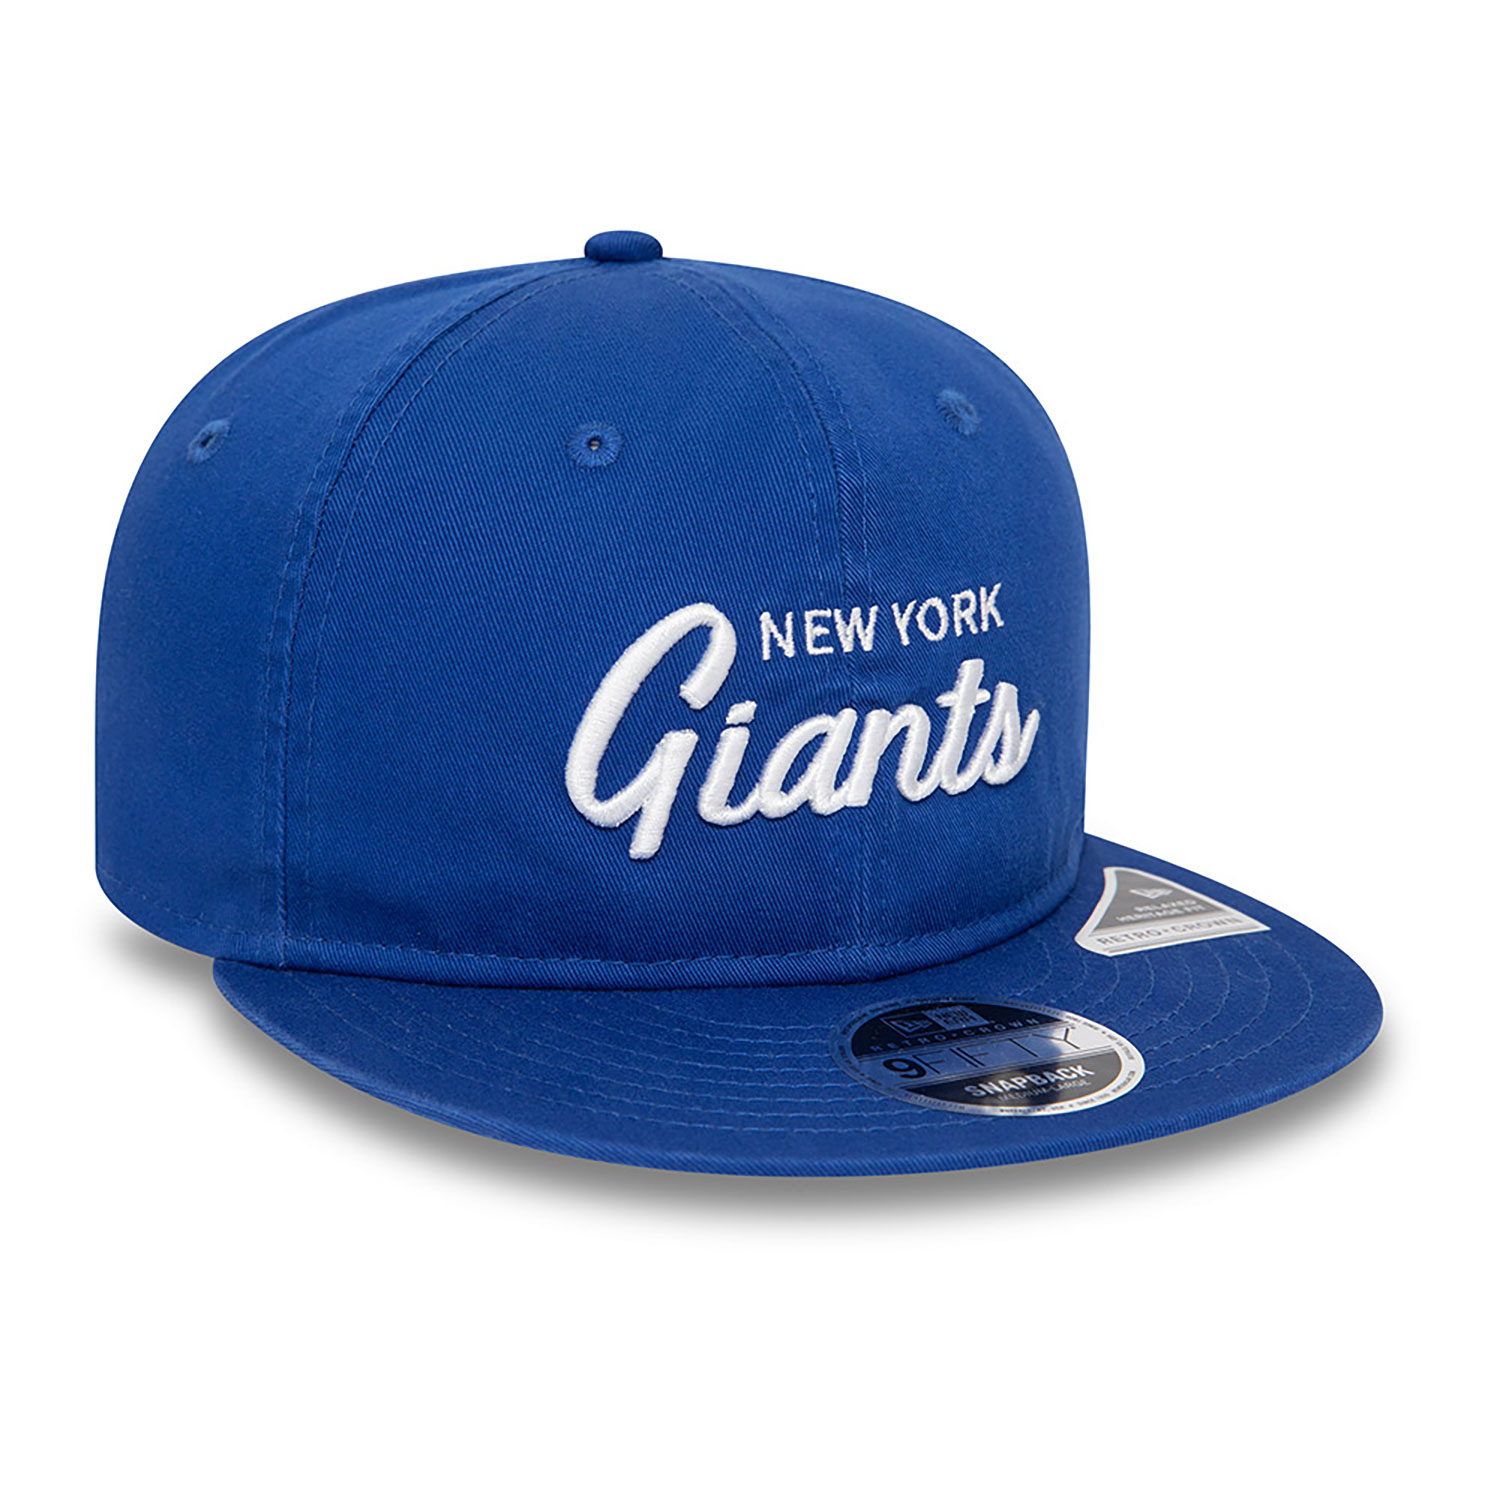 New York Giants NFL Retro Blue Retro Crown 9FIFTY Snapback Cap